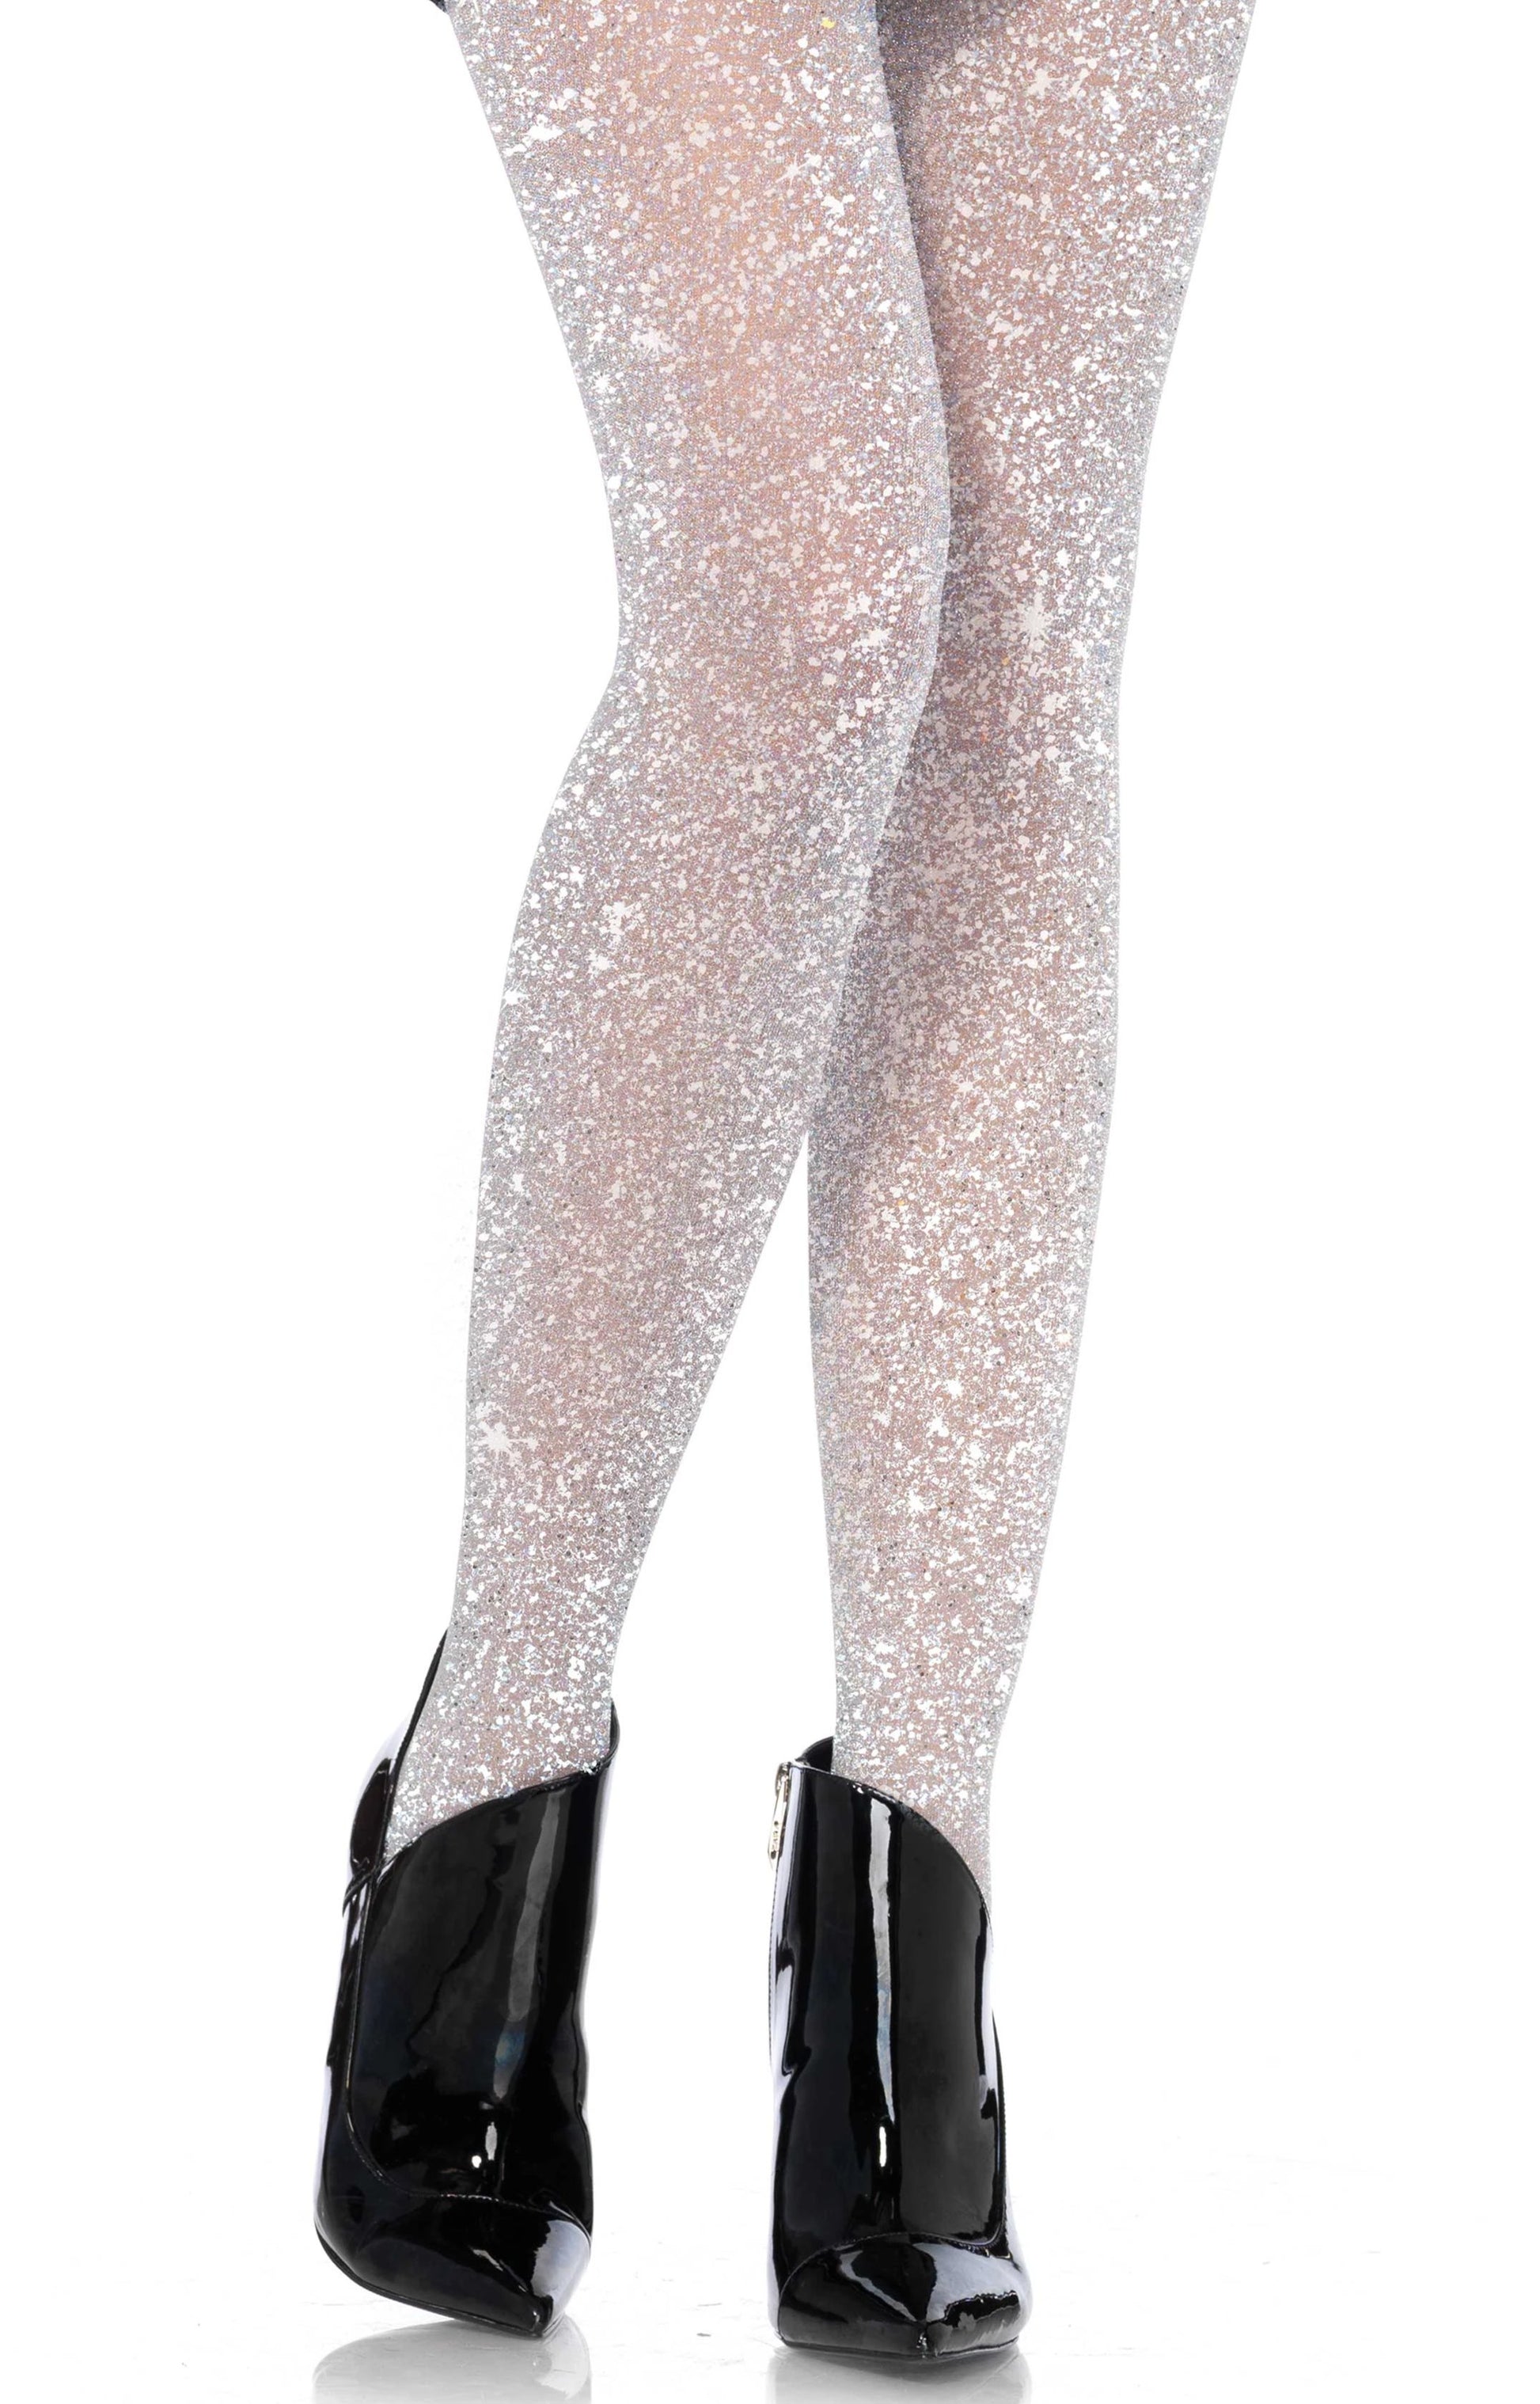 Leg Avenue 7130 Lurex sheer pantyhose - silver sparkly glitter tights